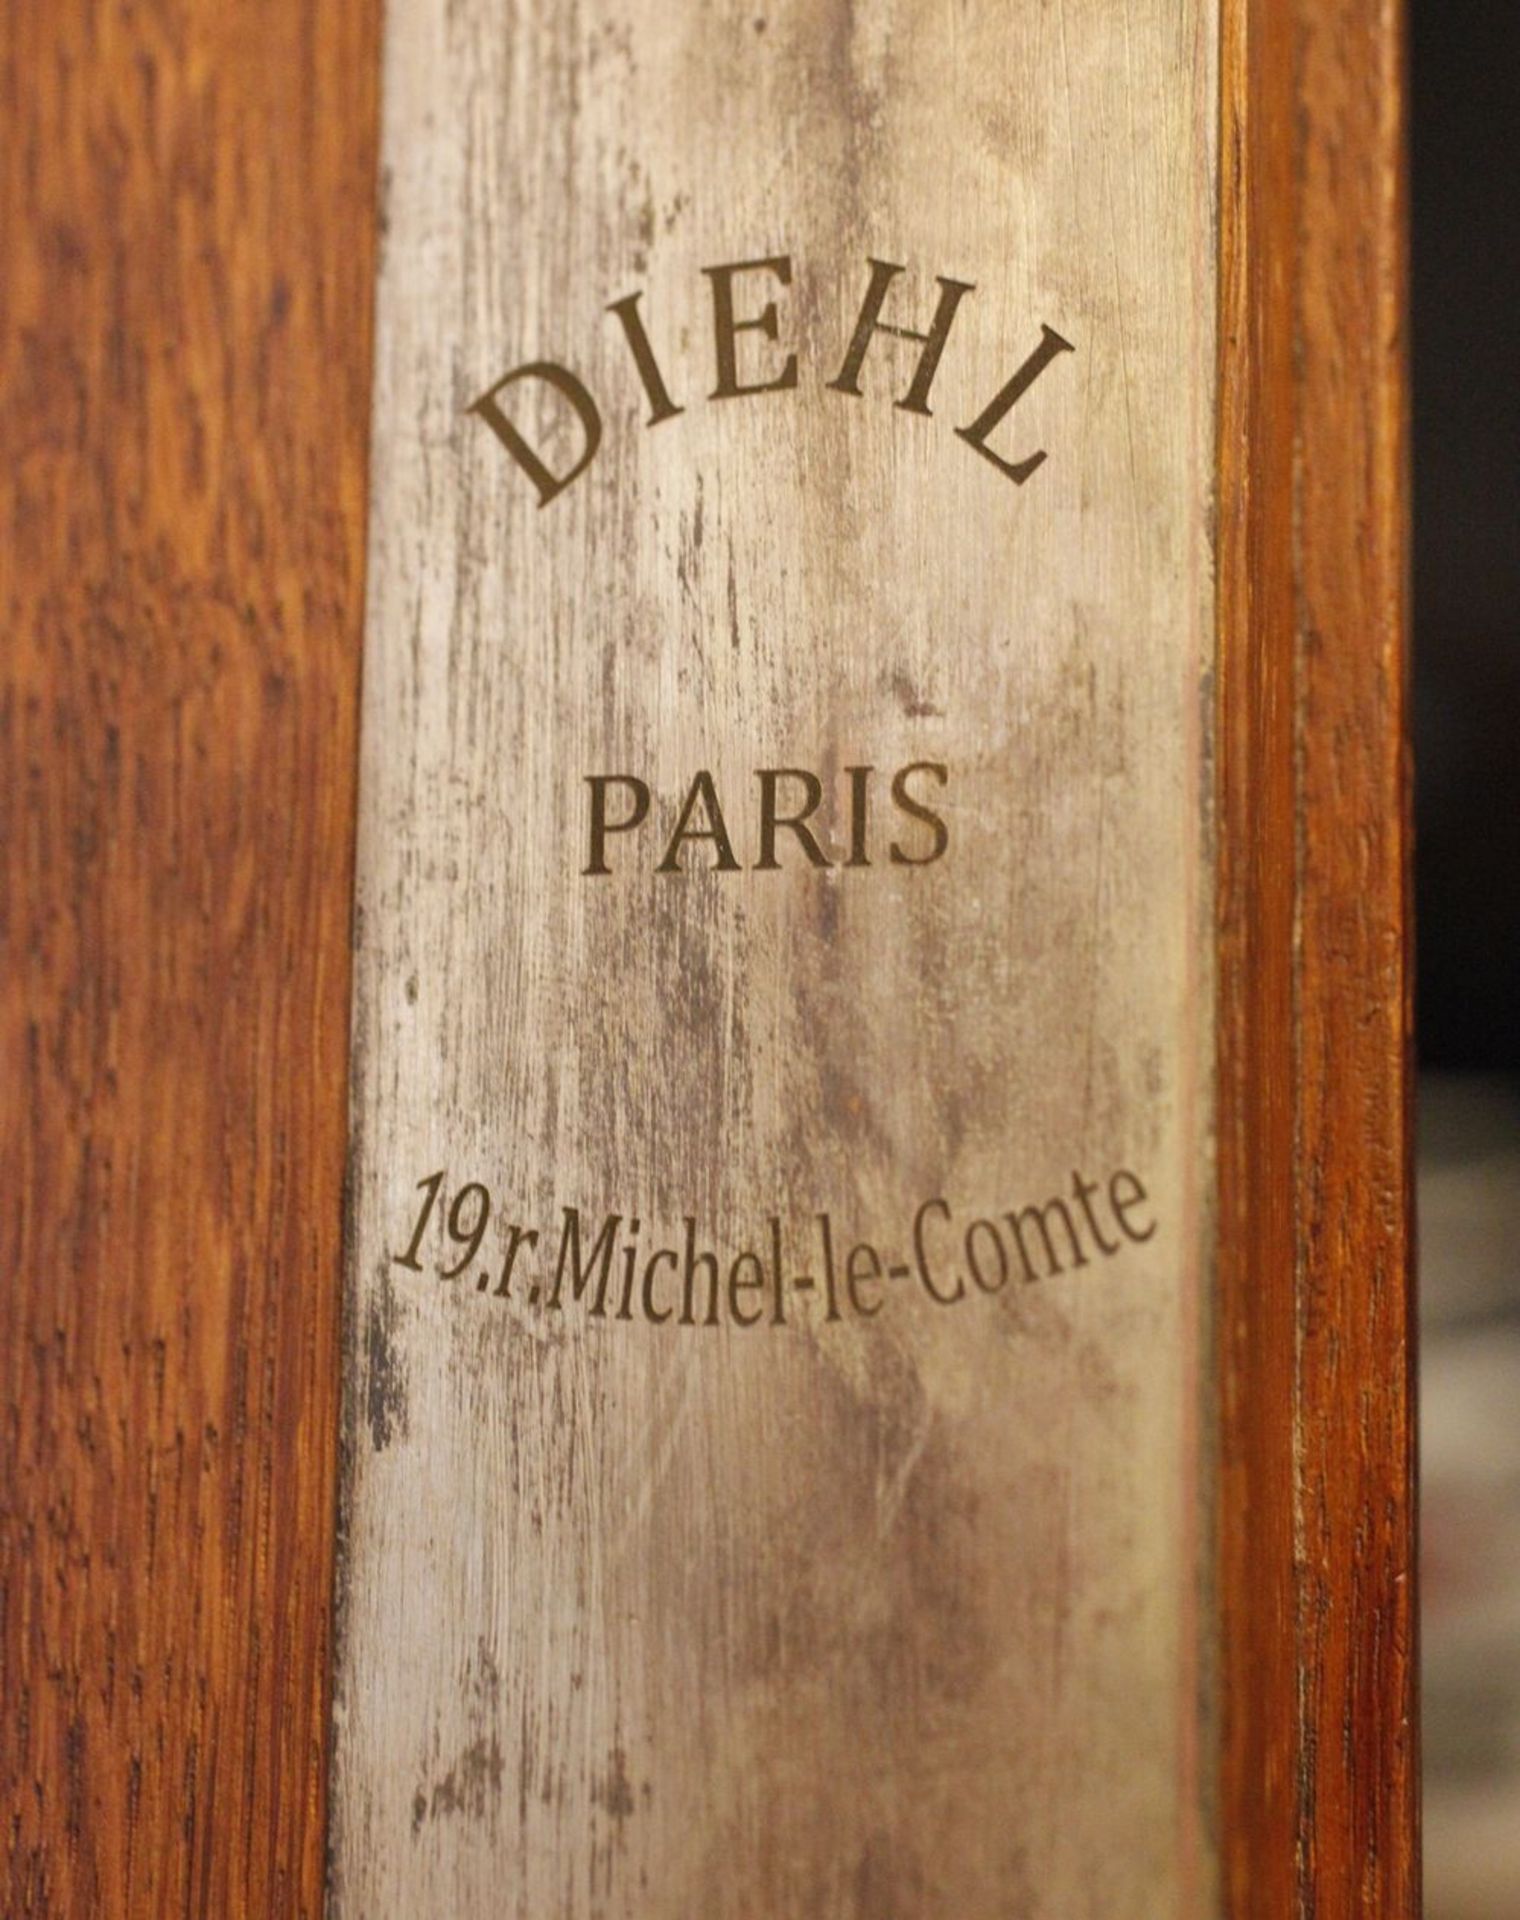 Humidor Guillaume Diehl2. Hälfte 19. Jh., innen gemarkt "Diehl Paris, 19. r. Michel-le-Compte", - Image 16 of 16